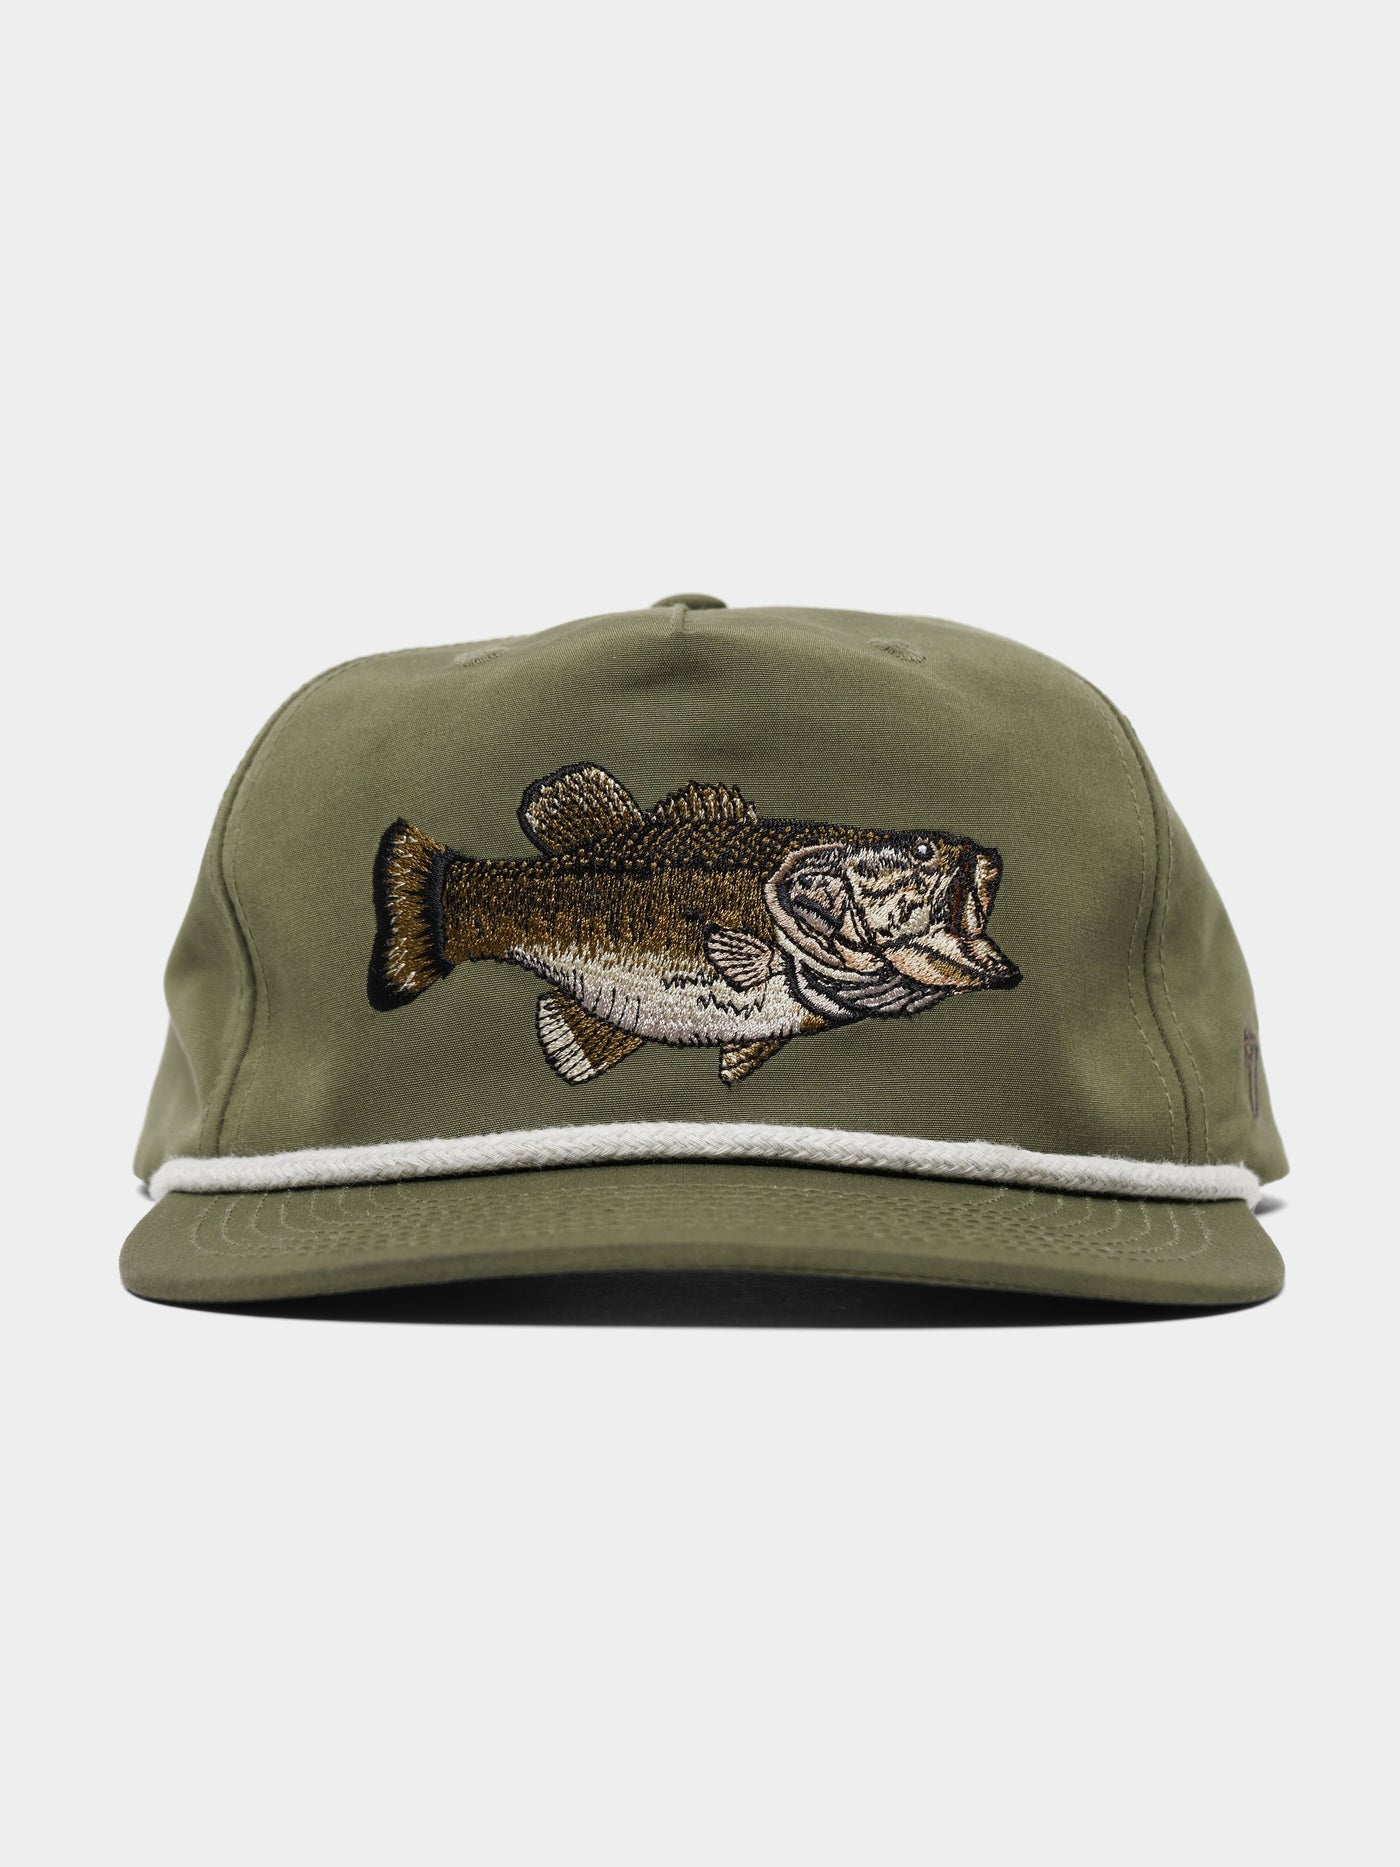  Carp Fishing Hat